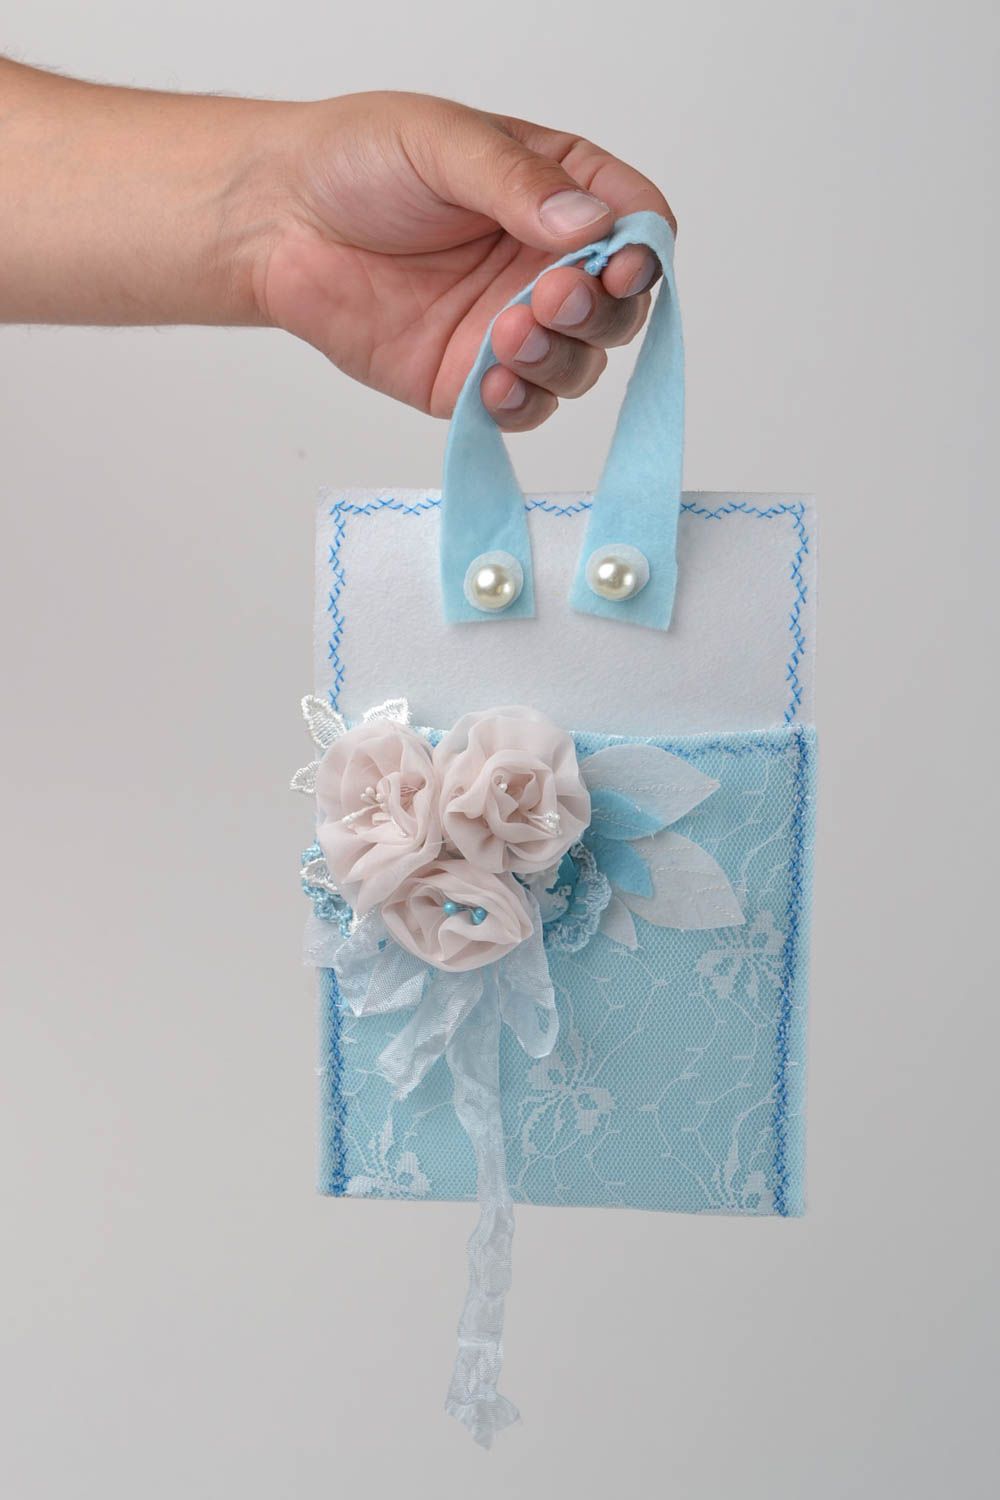 Handmade designer blue felt mobile phone case scrapbooking decorative for women photo 2